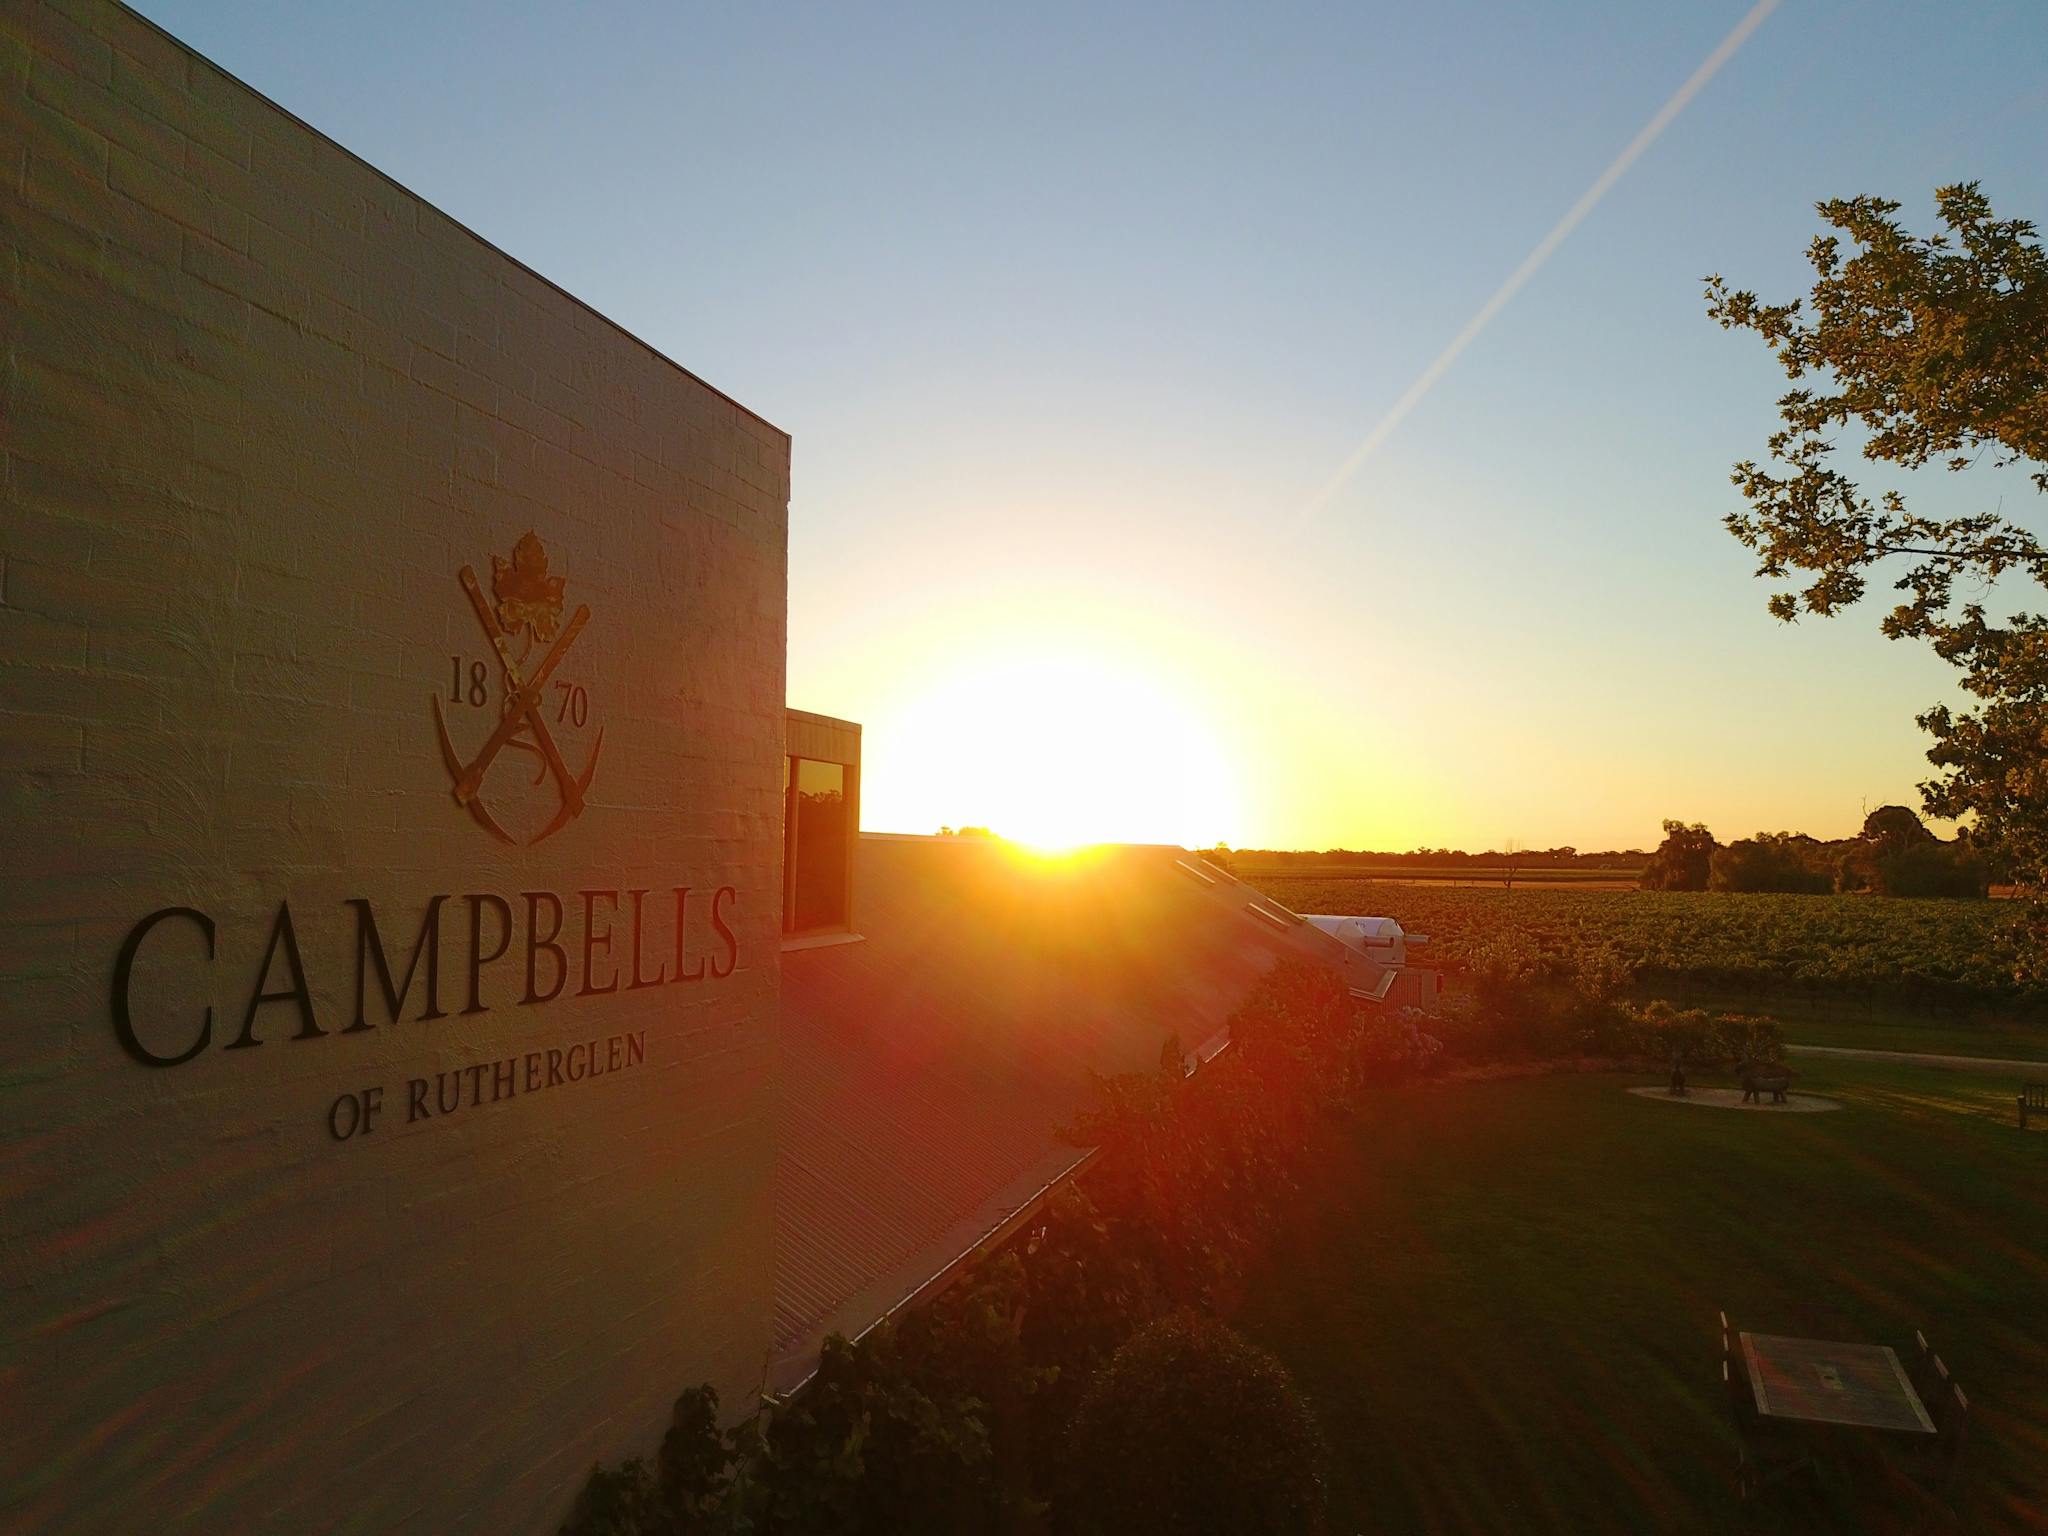 Campbells at sunset